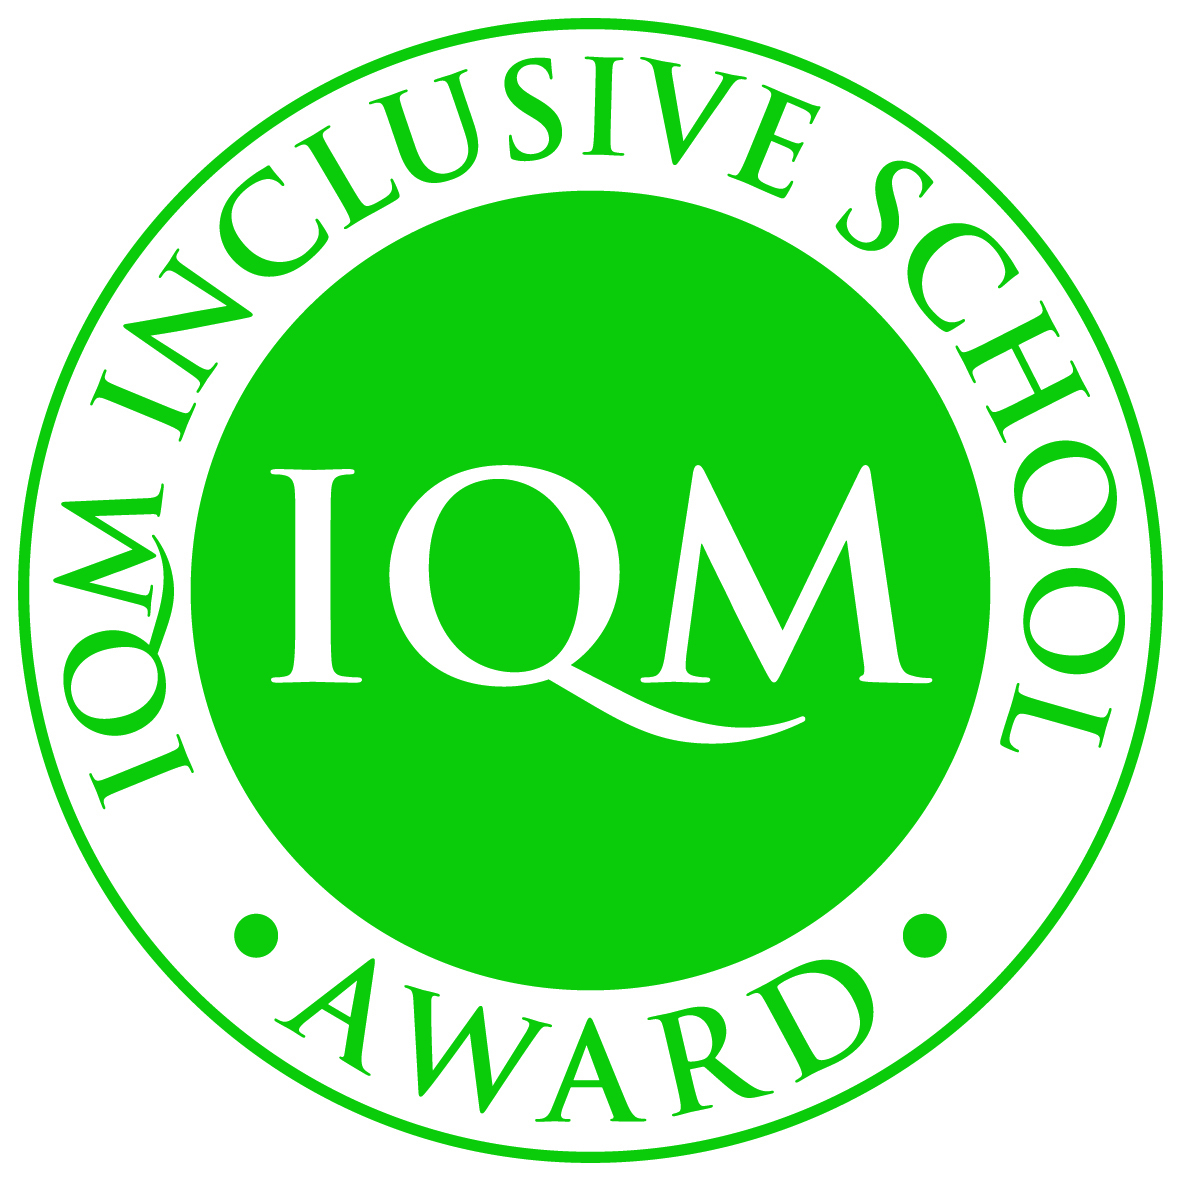 IQM Inclusive School Award logo   Green   Pantone Ref. 356c